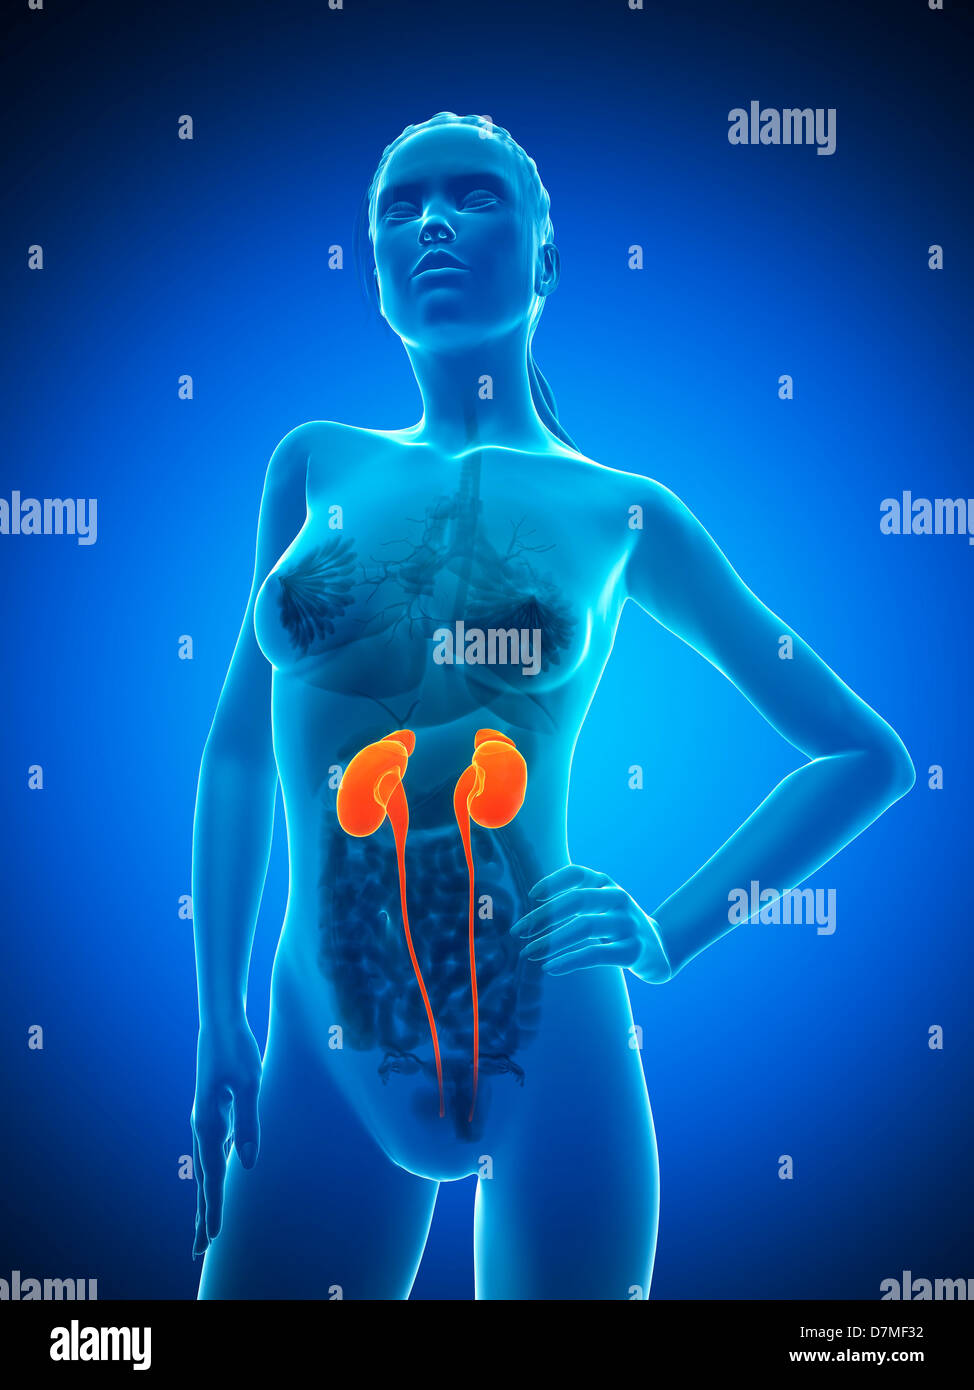 Healthy Kidneys Stock Photos & Healthy Kidneys Stock Images - Alamy